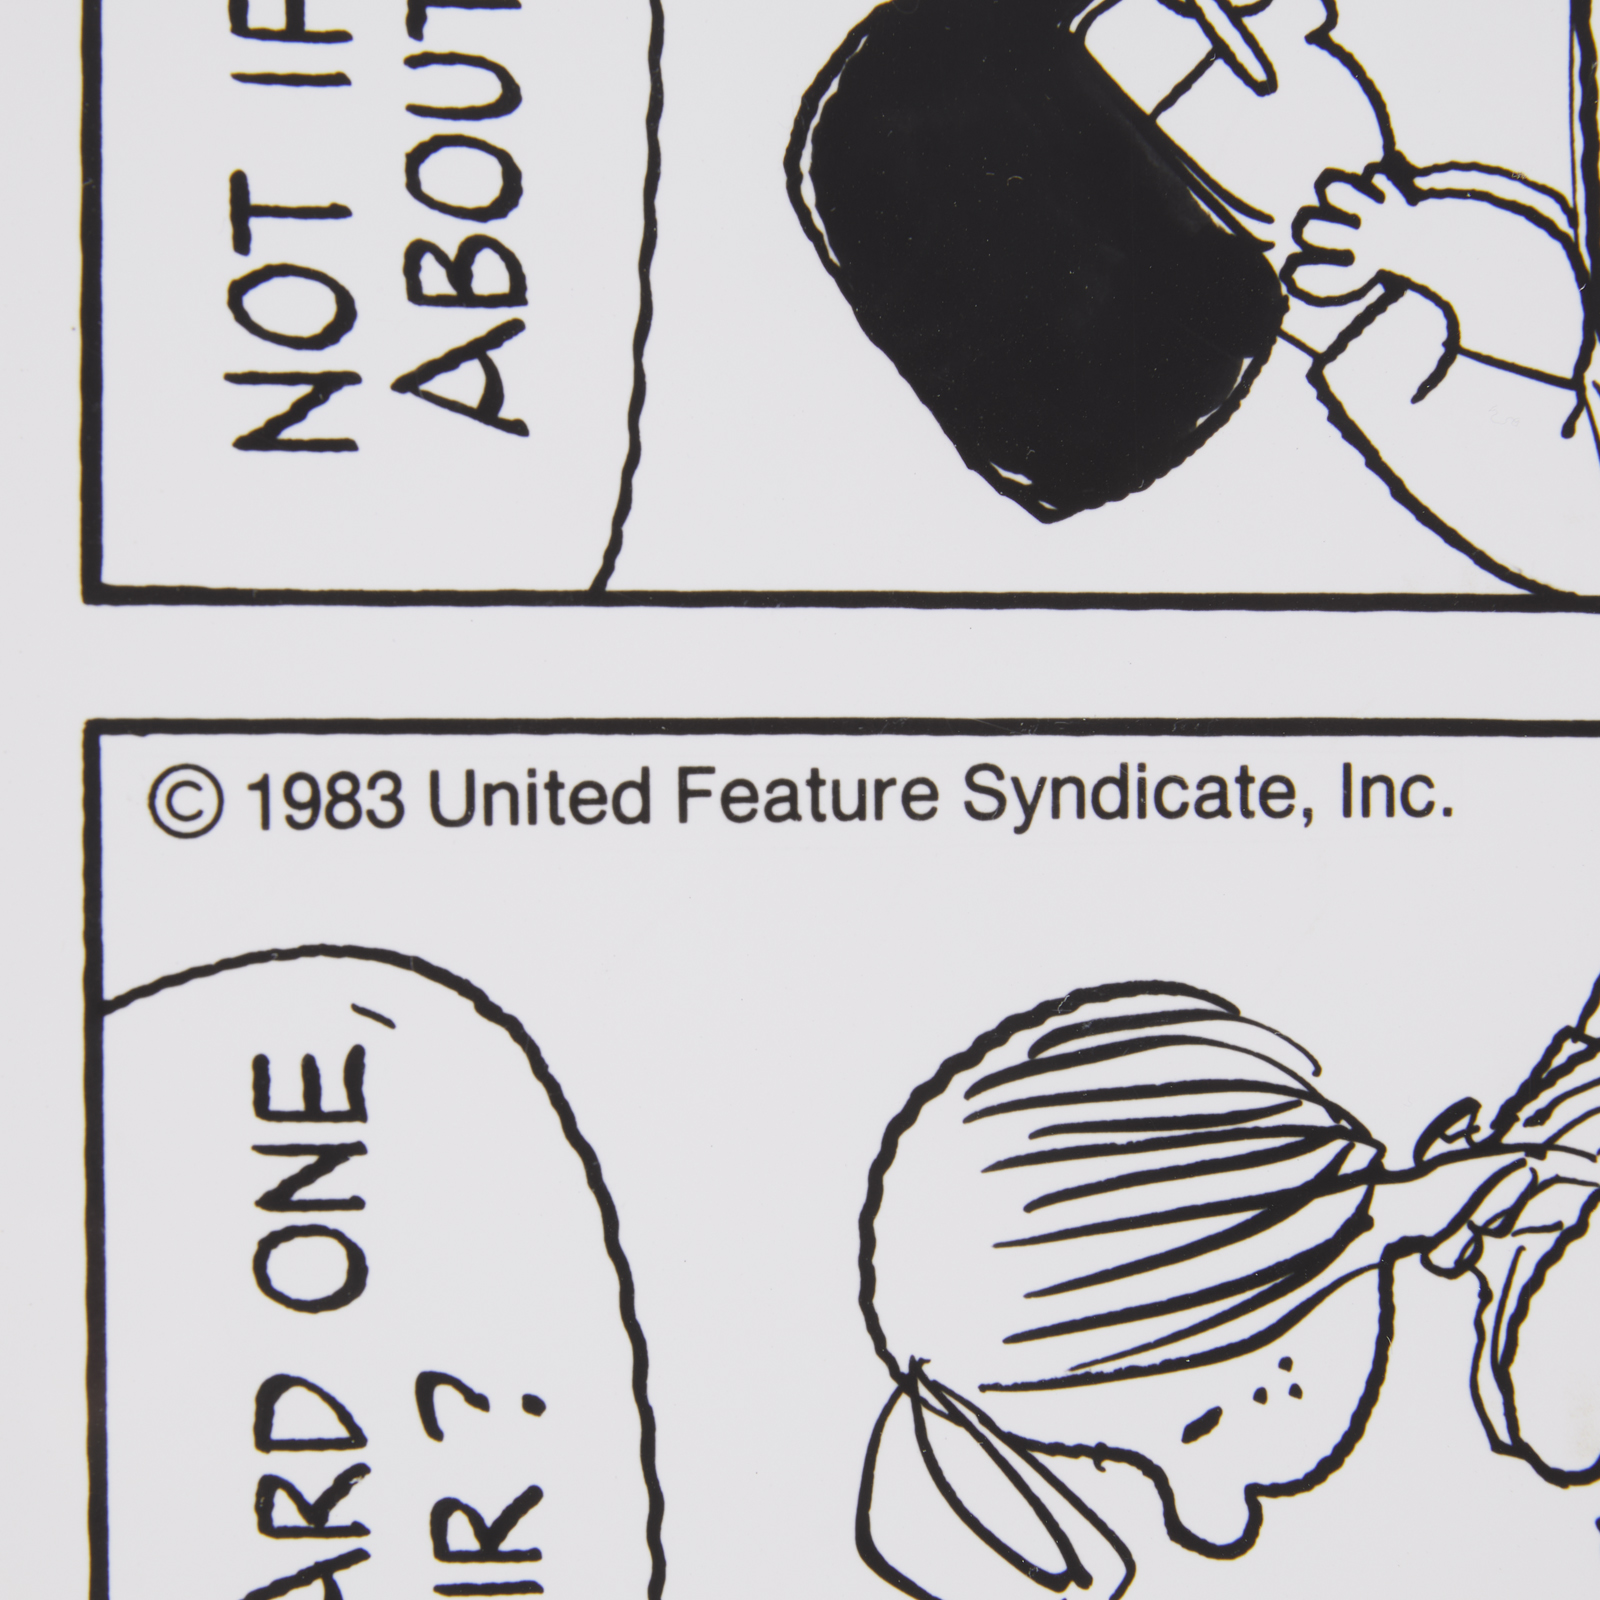 Peanuts Comic Strip Lithograph January 19, 1983 - Image 8 of 9